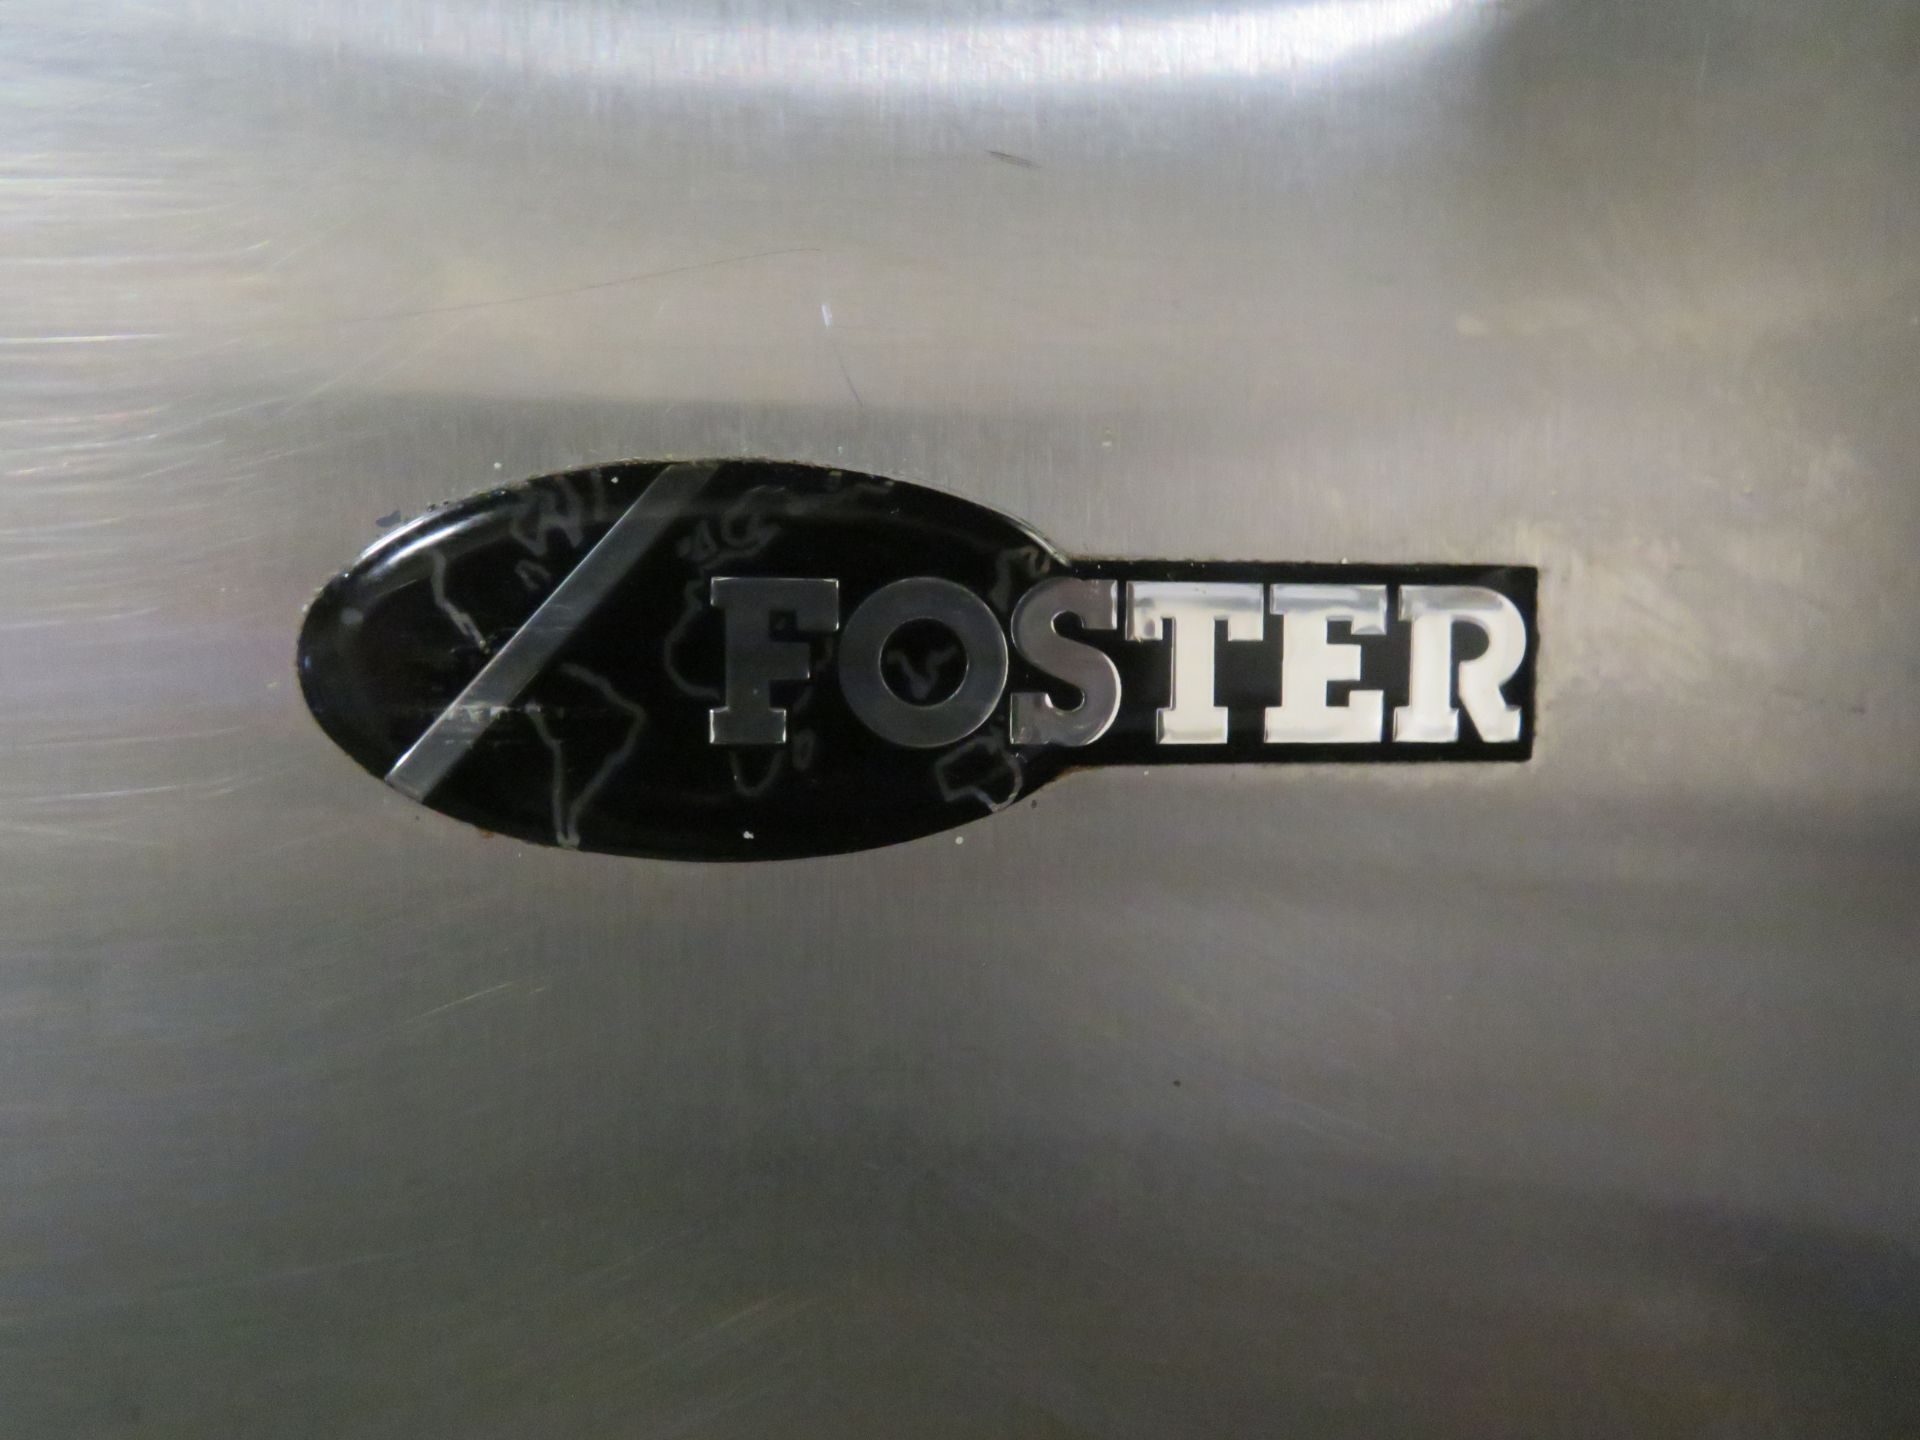 Fosters Prog 600H fridge - Image 2 of 5